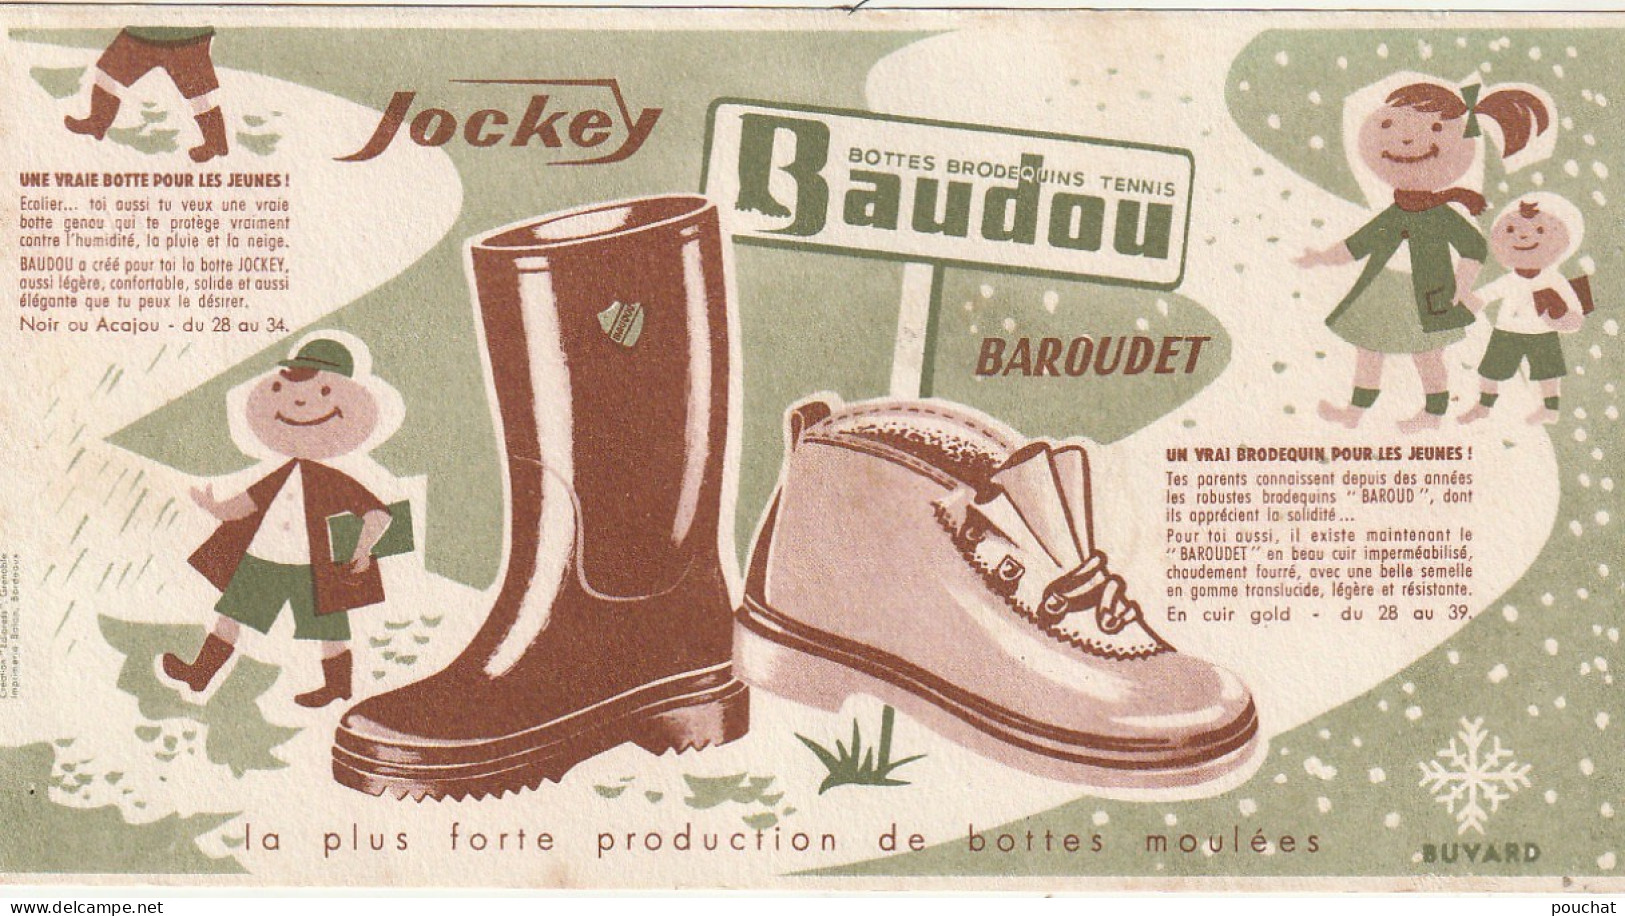 GU Nw - " BAUDOU  " - BOTTE JOCKEY , BRODEQUIN BAROUDET - CREATION EDIPRESS , GRENOBLE - IMP. BALAN , BORDEAUX - Shoes